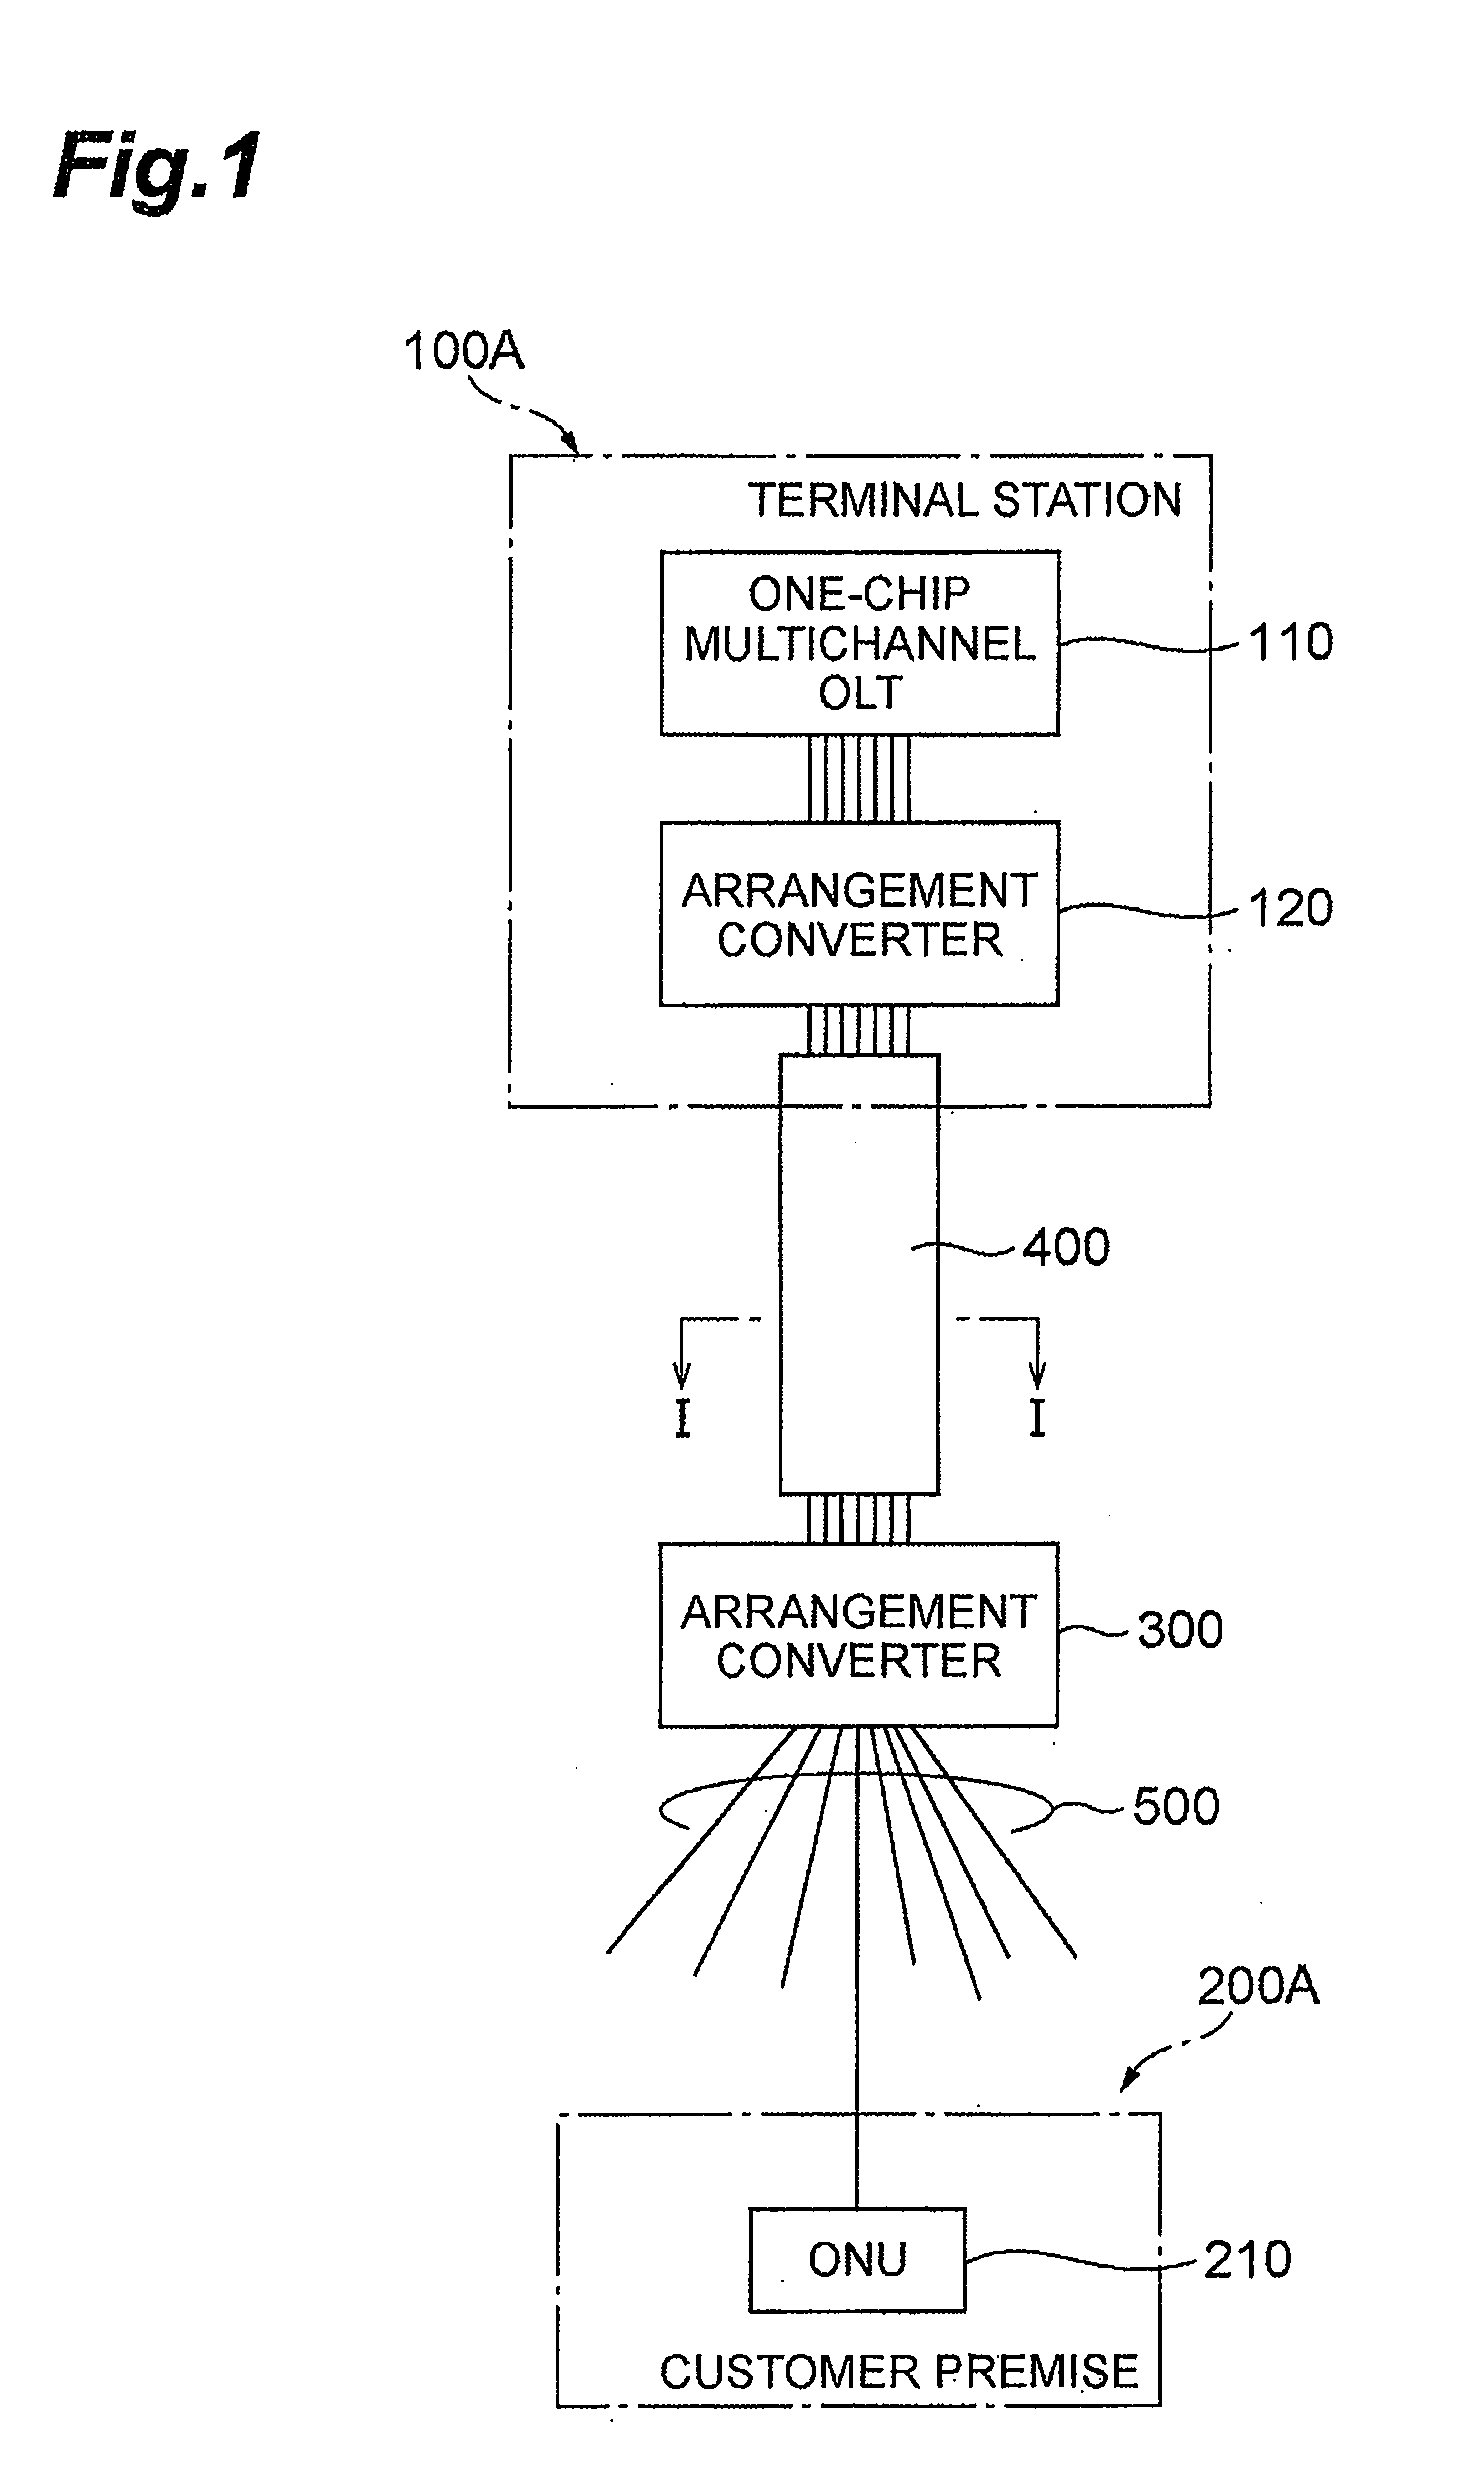 Optical communication system and arrangement converter